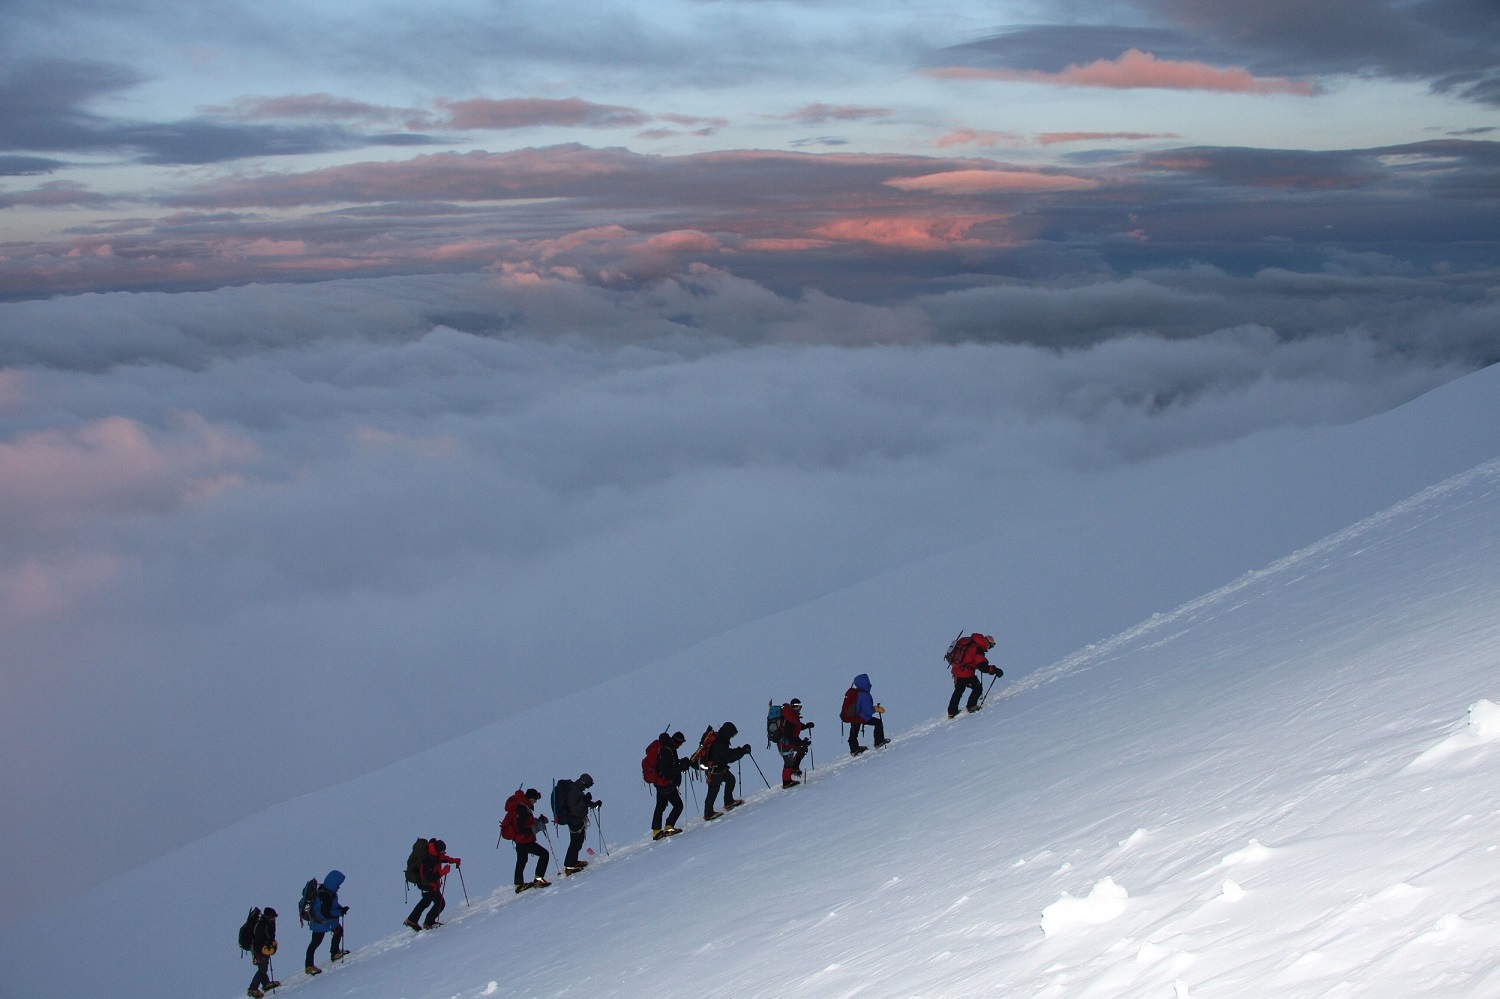 Summiting Mt Elbrus